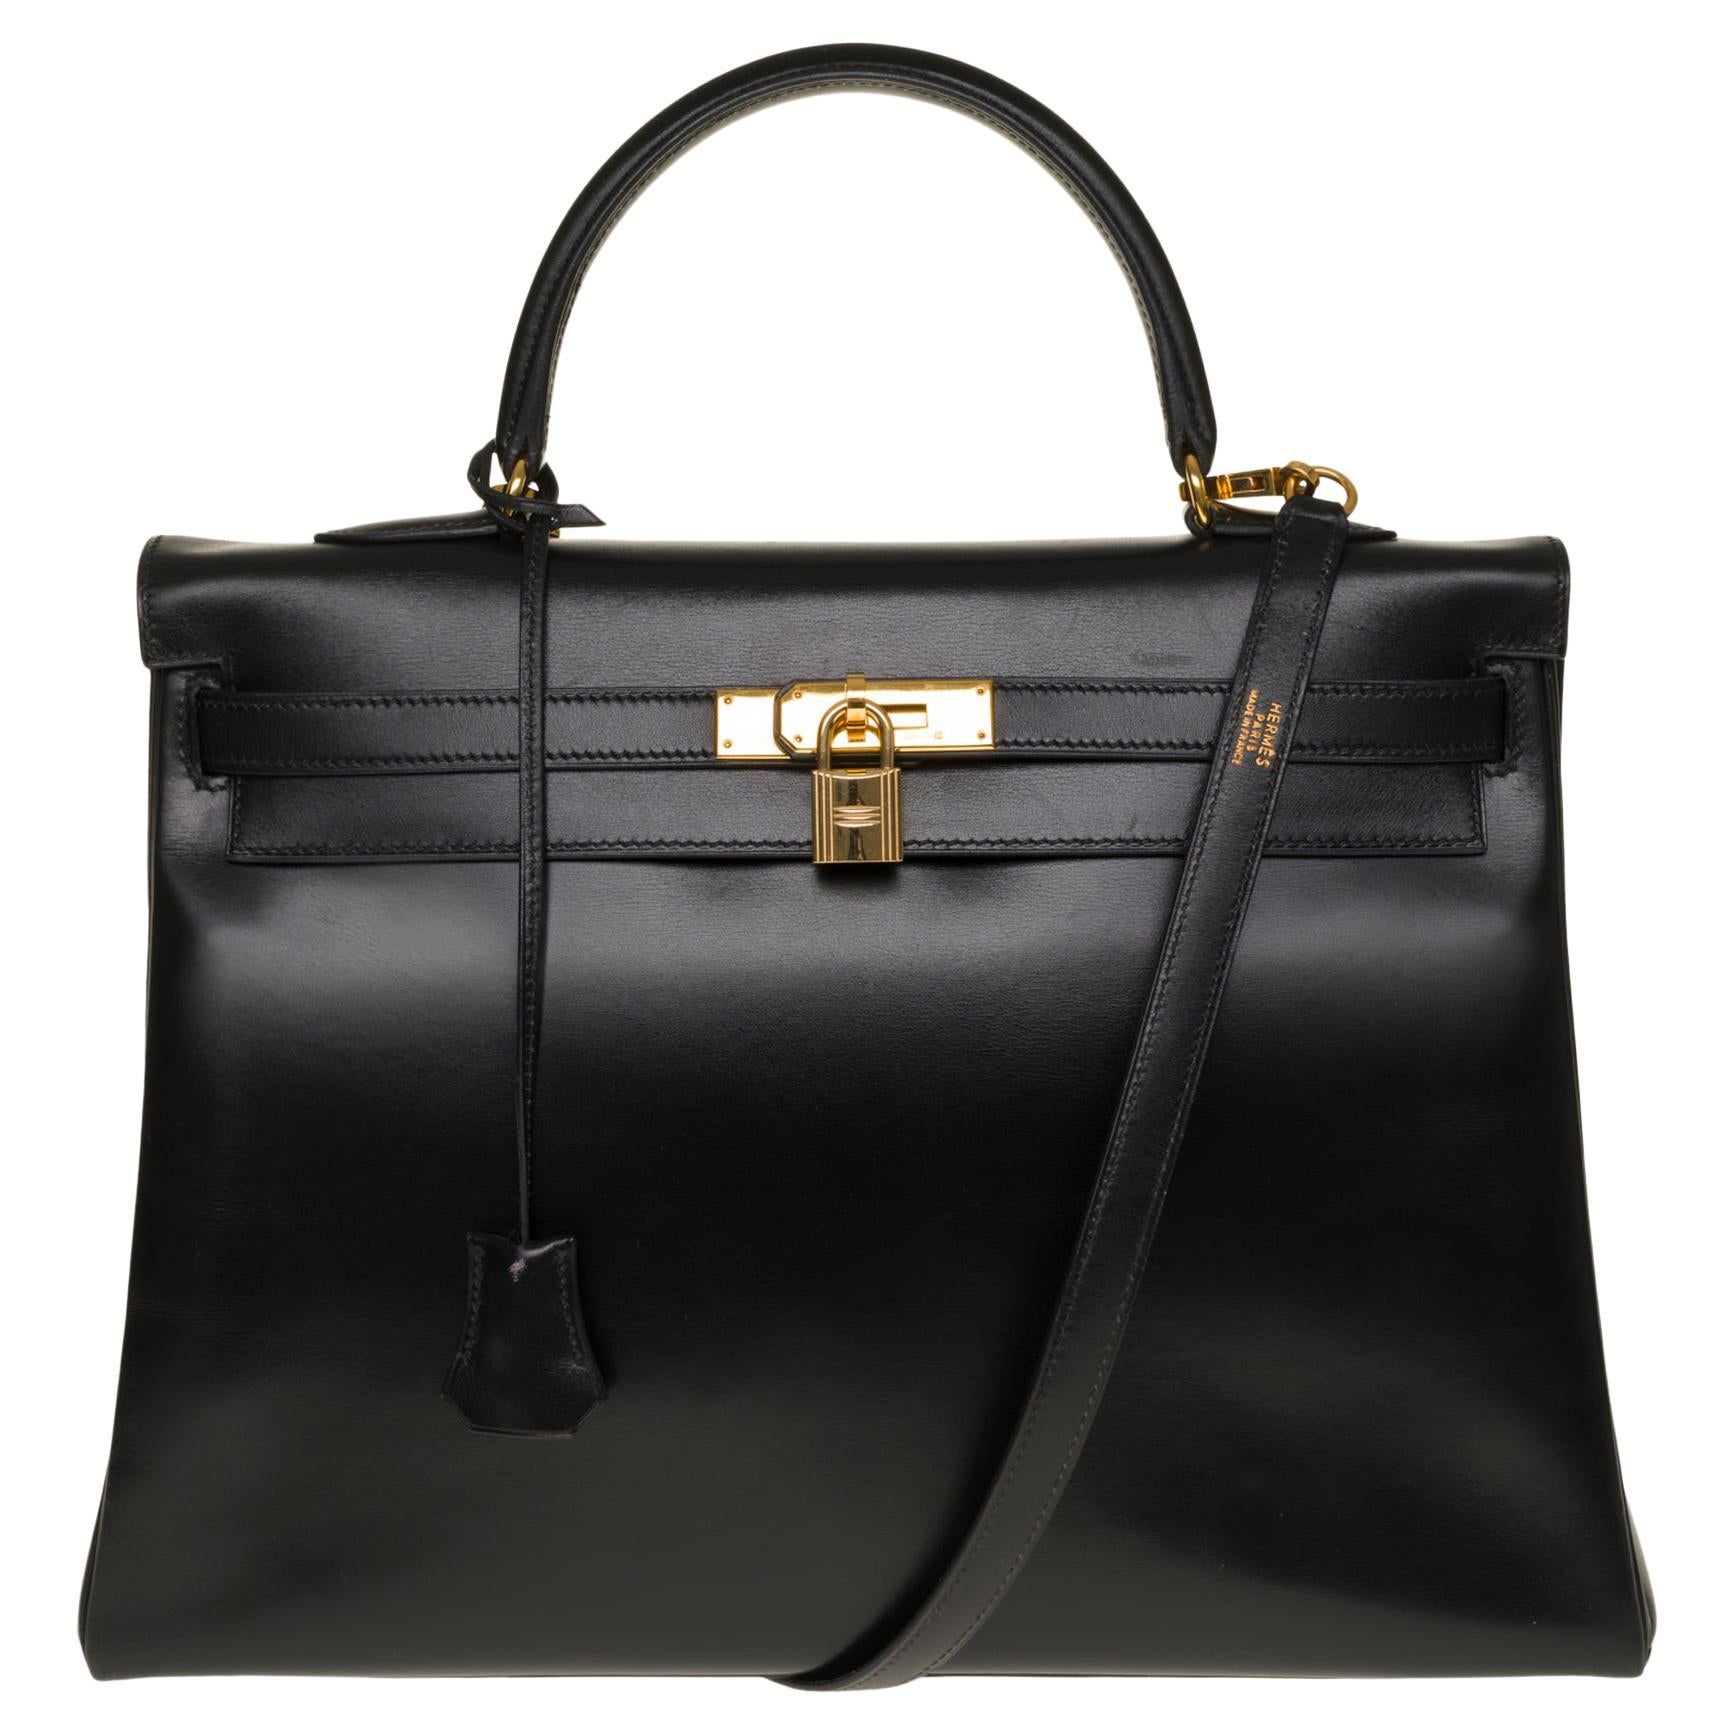 Rare Hermès Kelly 35 retourné handbag with strap in Black Calf leather, GHW